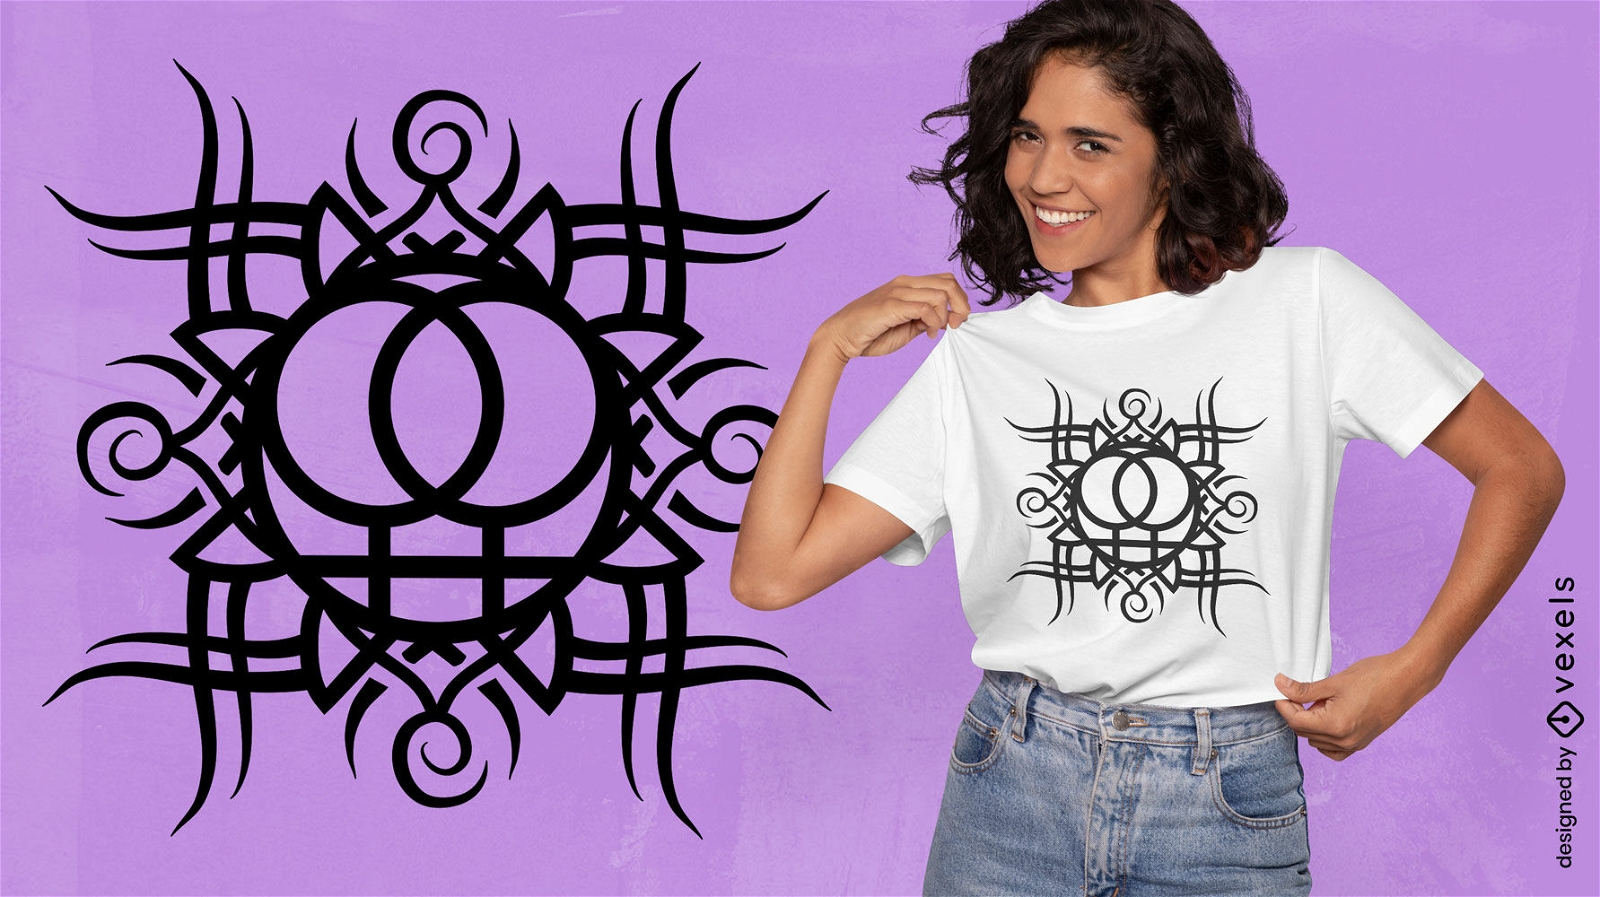 Design de camiseta de símbolo tribal feminista